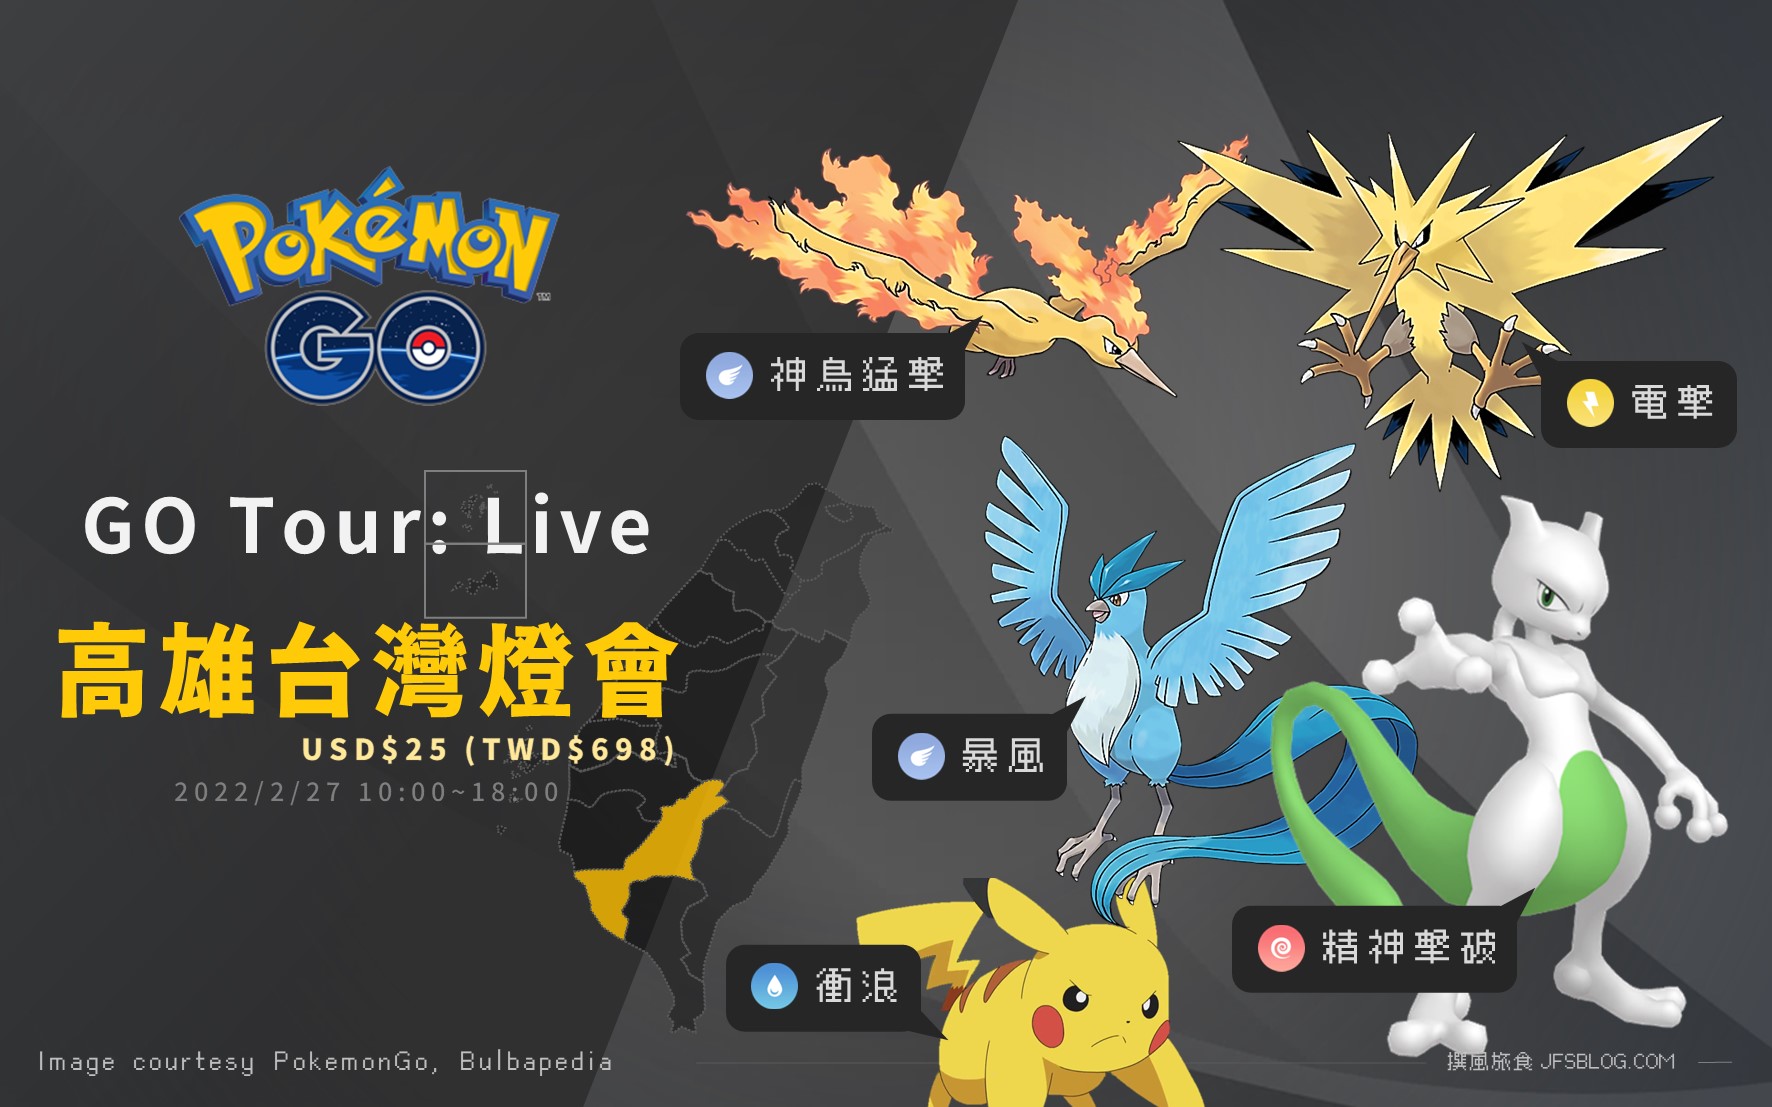 Pokemon GO／Pokémon GO Tour: Live高雄台灣燈會場，經典關都寶可夢與進化特殊招式回歸